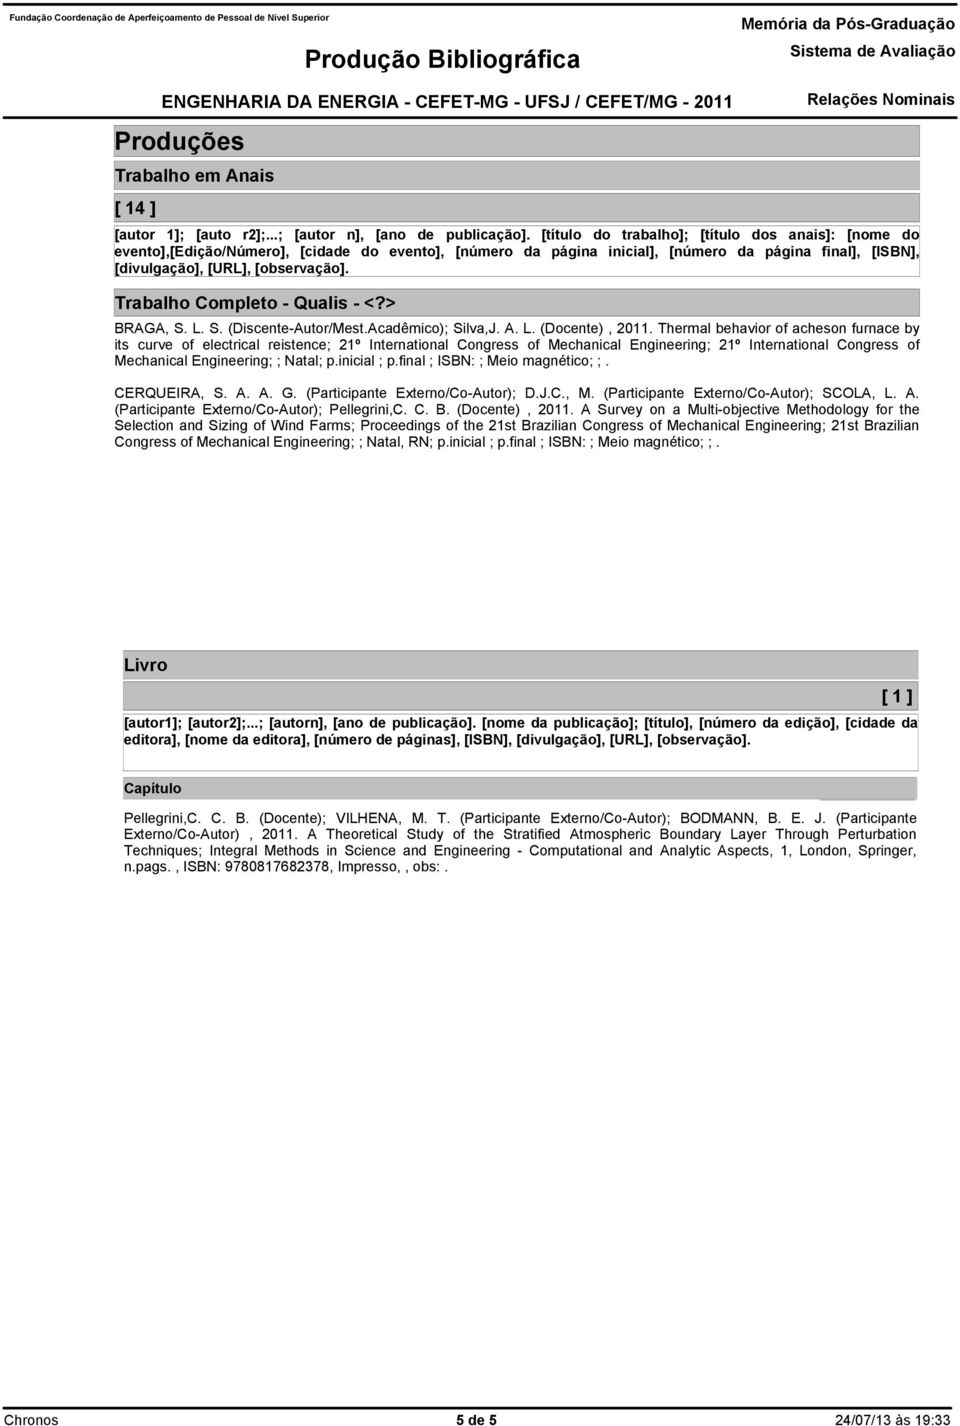 inicial ; p.final ; ISBN: ; Meio magnético; ;. CERQUEIRA, S. A. A. G. (Participante Externo/Co-Autor); D.J.C., M. (Participante Externo/Co-Autor); SCOLA, L. A. (Participante Externo/Co-Autor); Pellegrini,C.